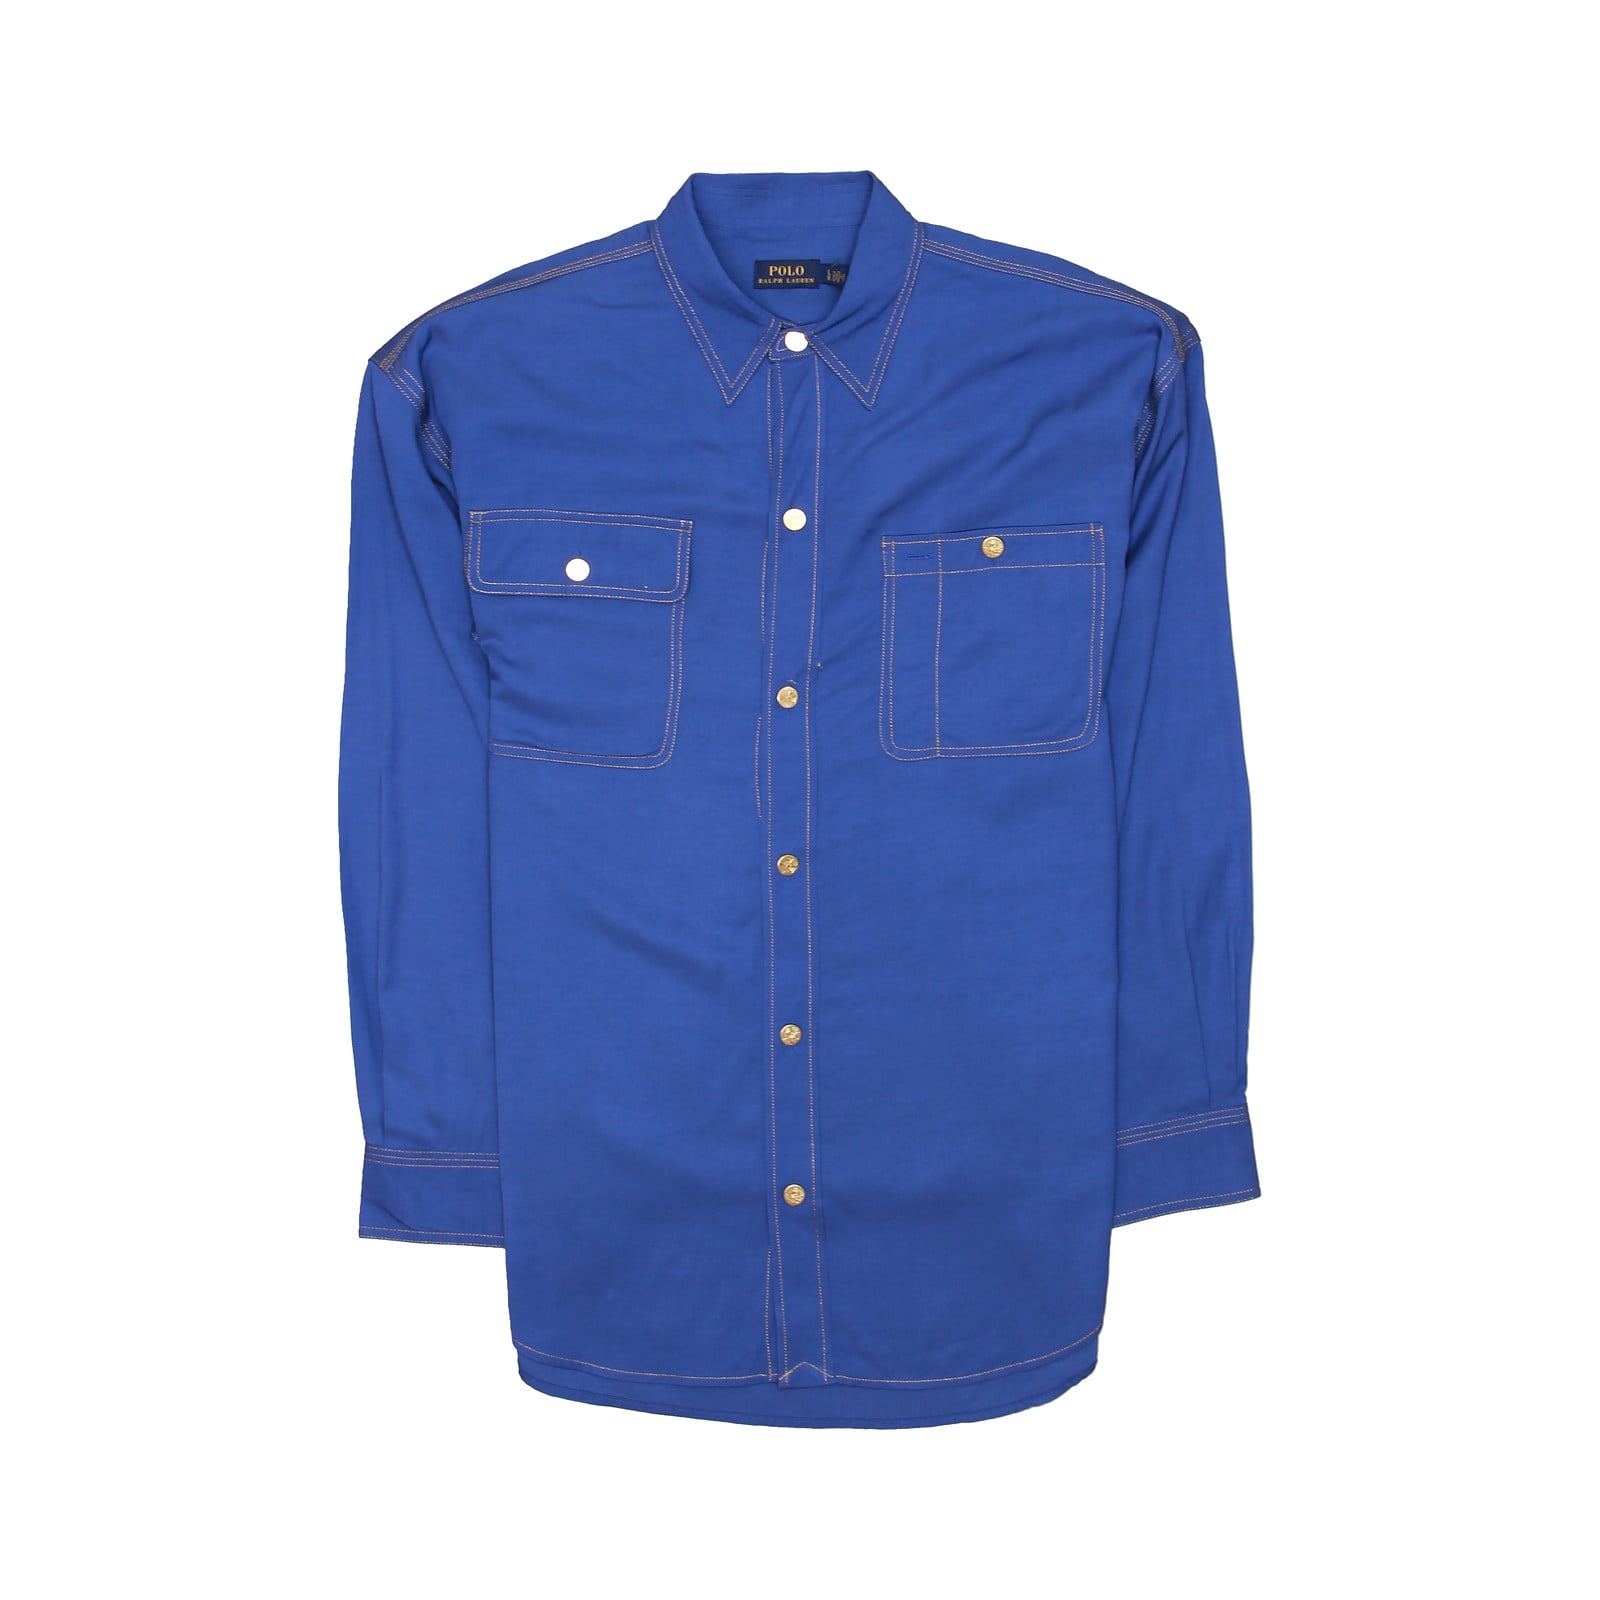 Polo Ralph Lauren Womens Gold Stitching & Buttons Down Shirt (Large, Blue)  